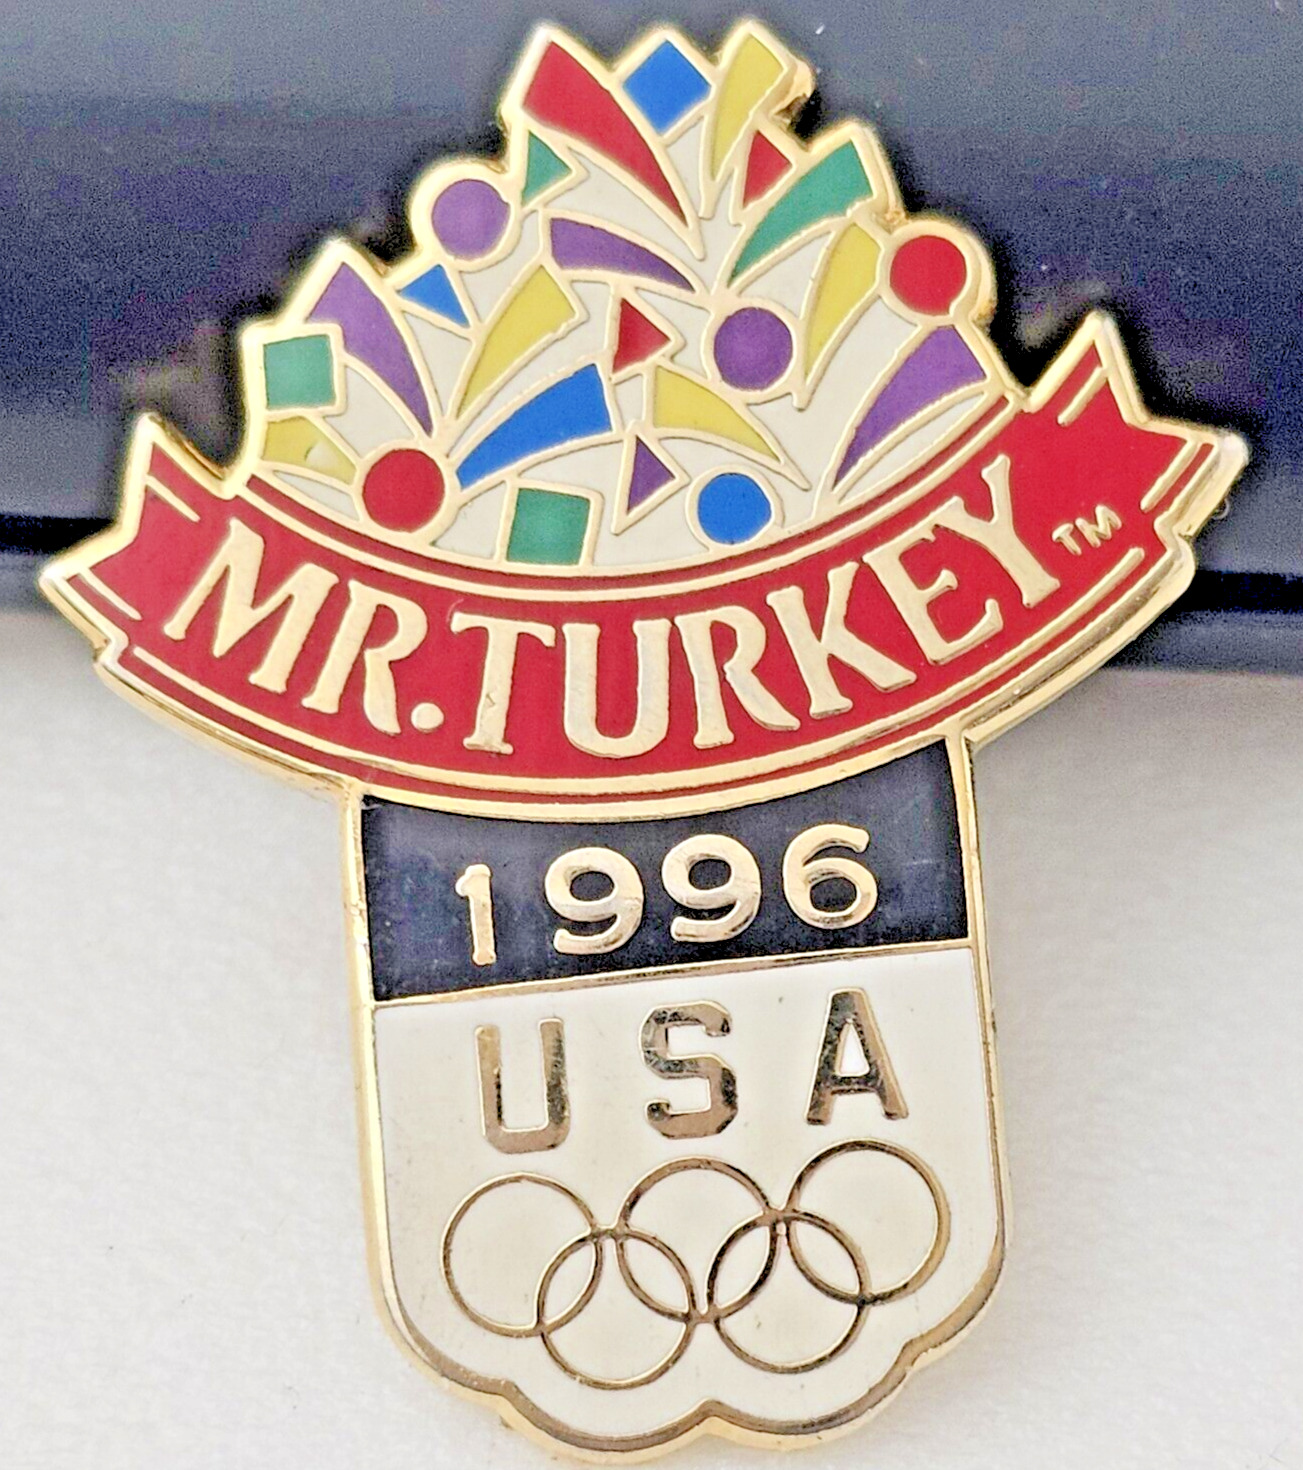 1996 USA Olympics Mr Turkey (New Never Worn)